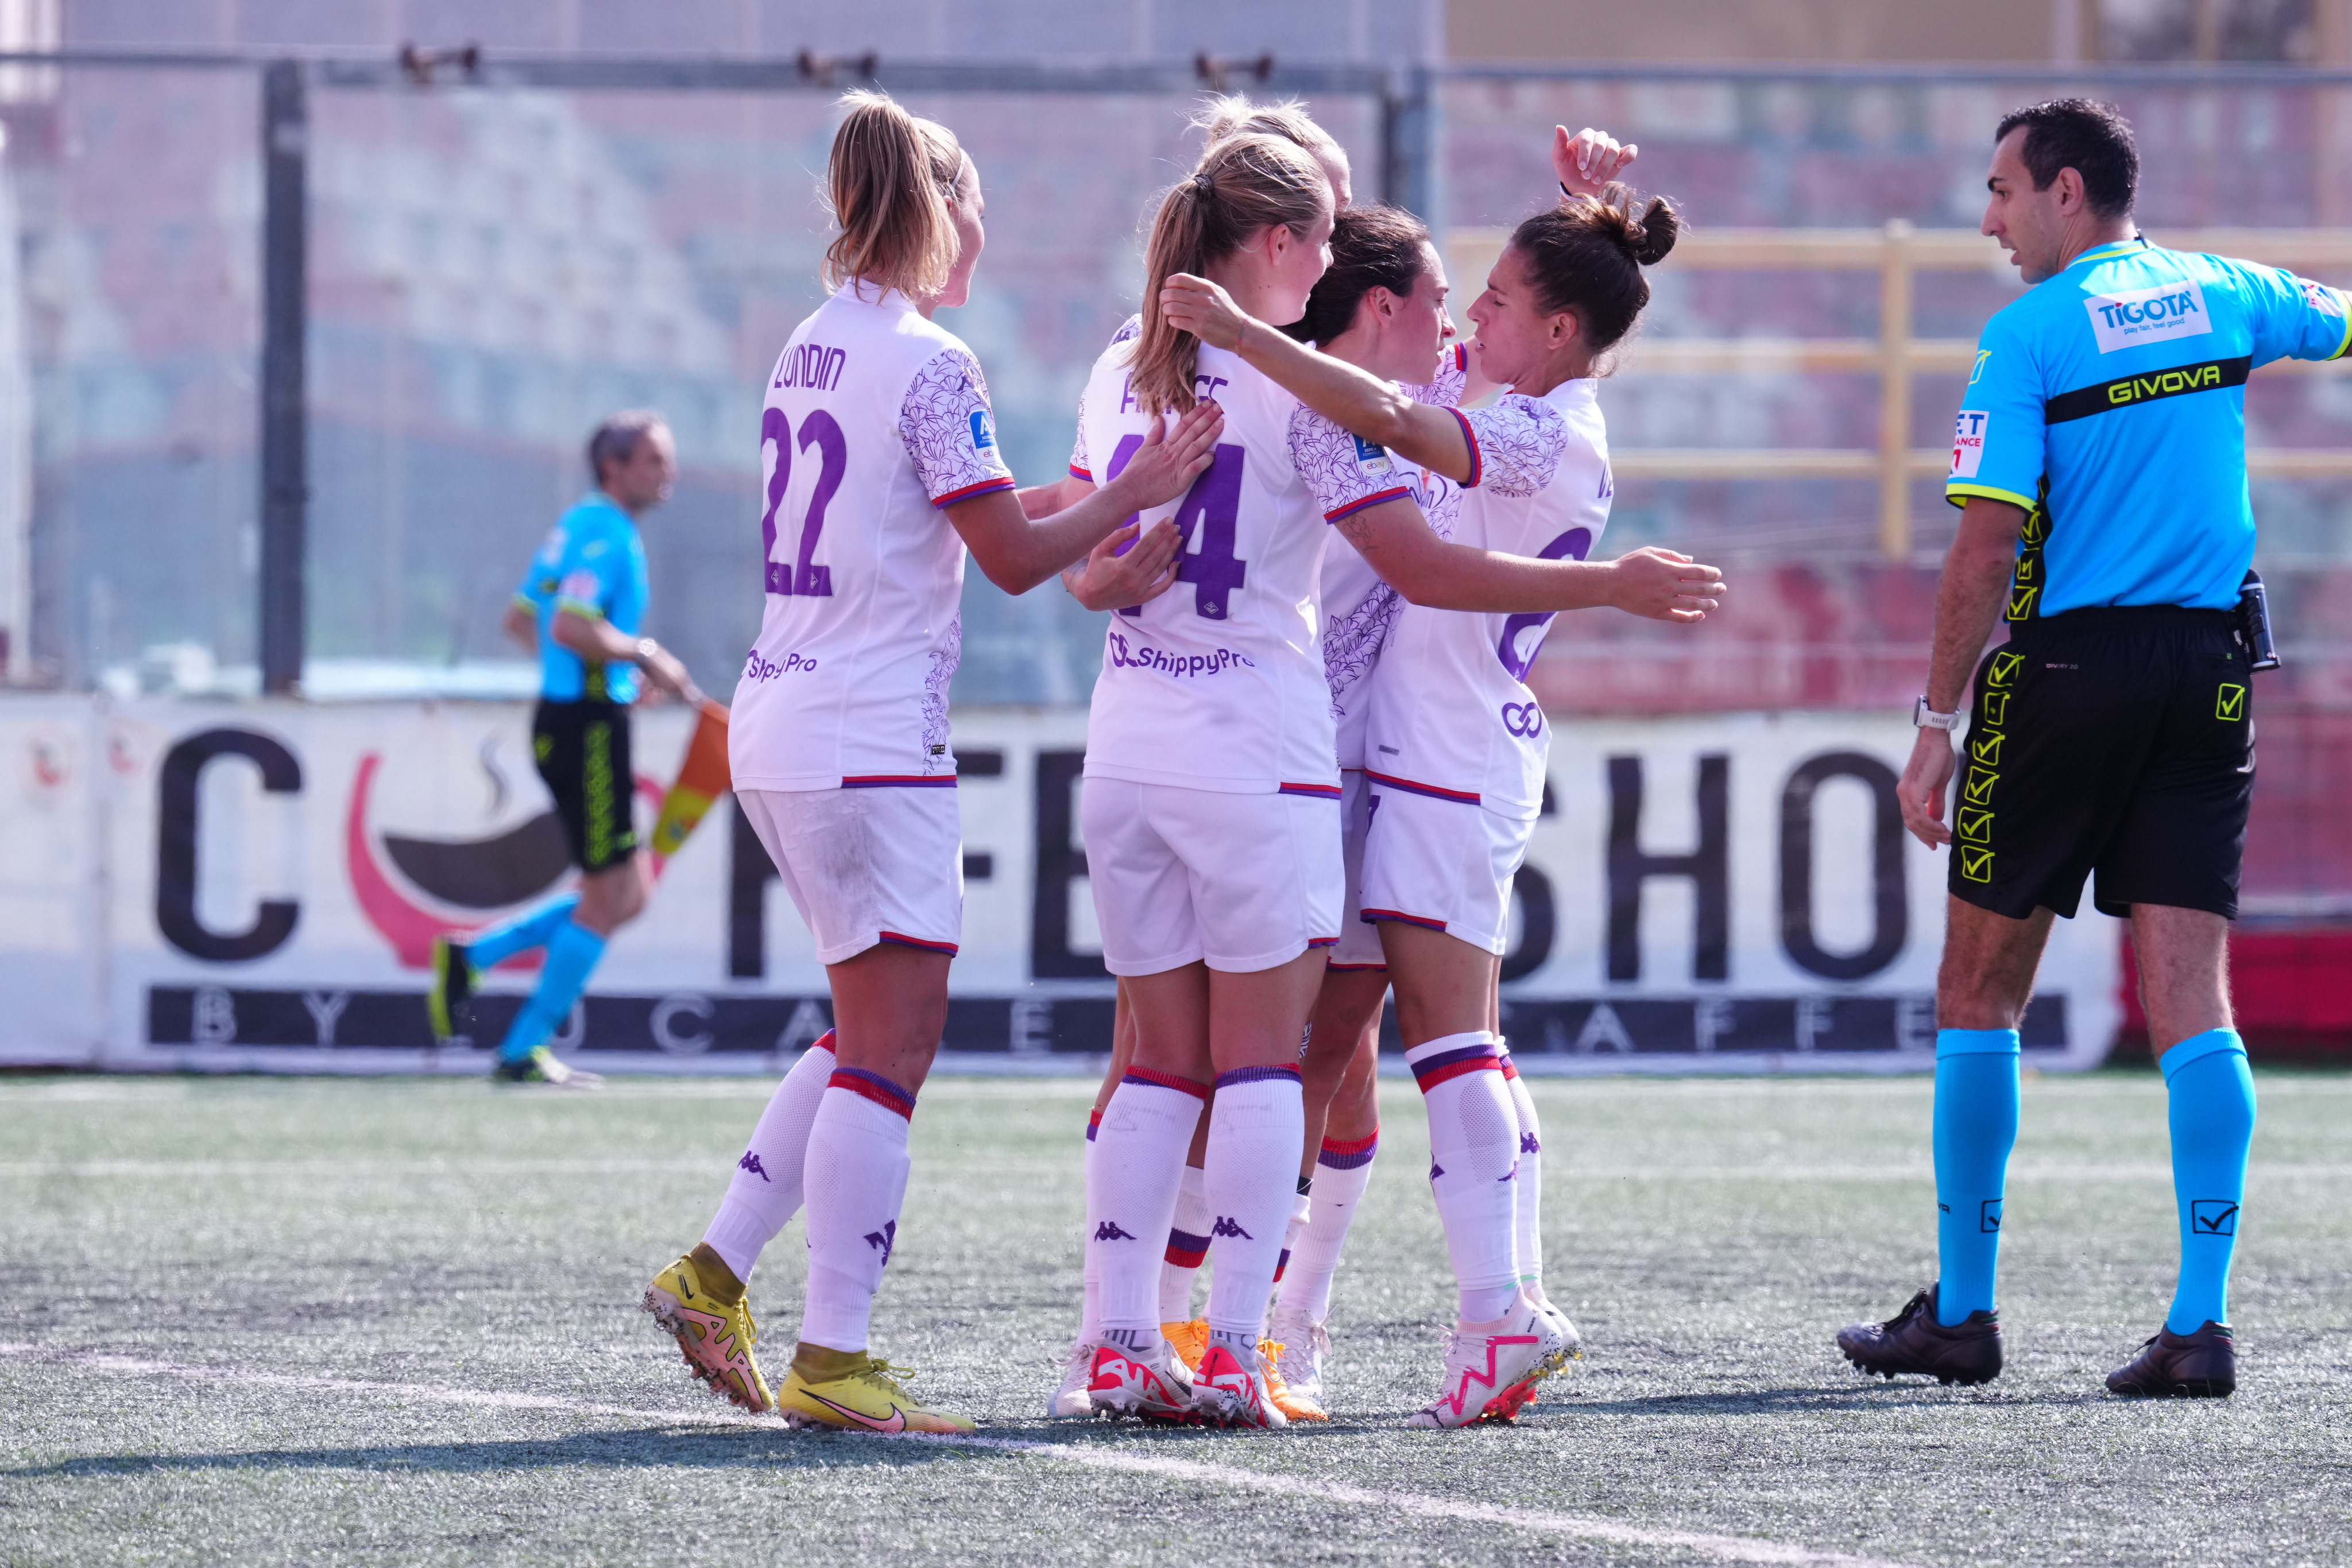 Highlights, AC Milan 1-2 Fiorentina Women